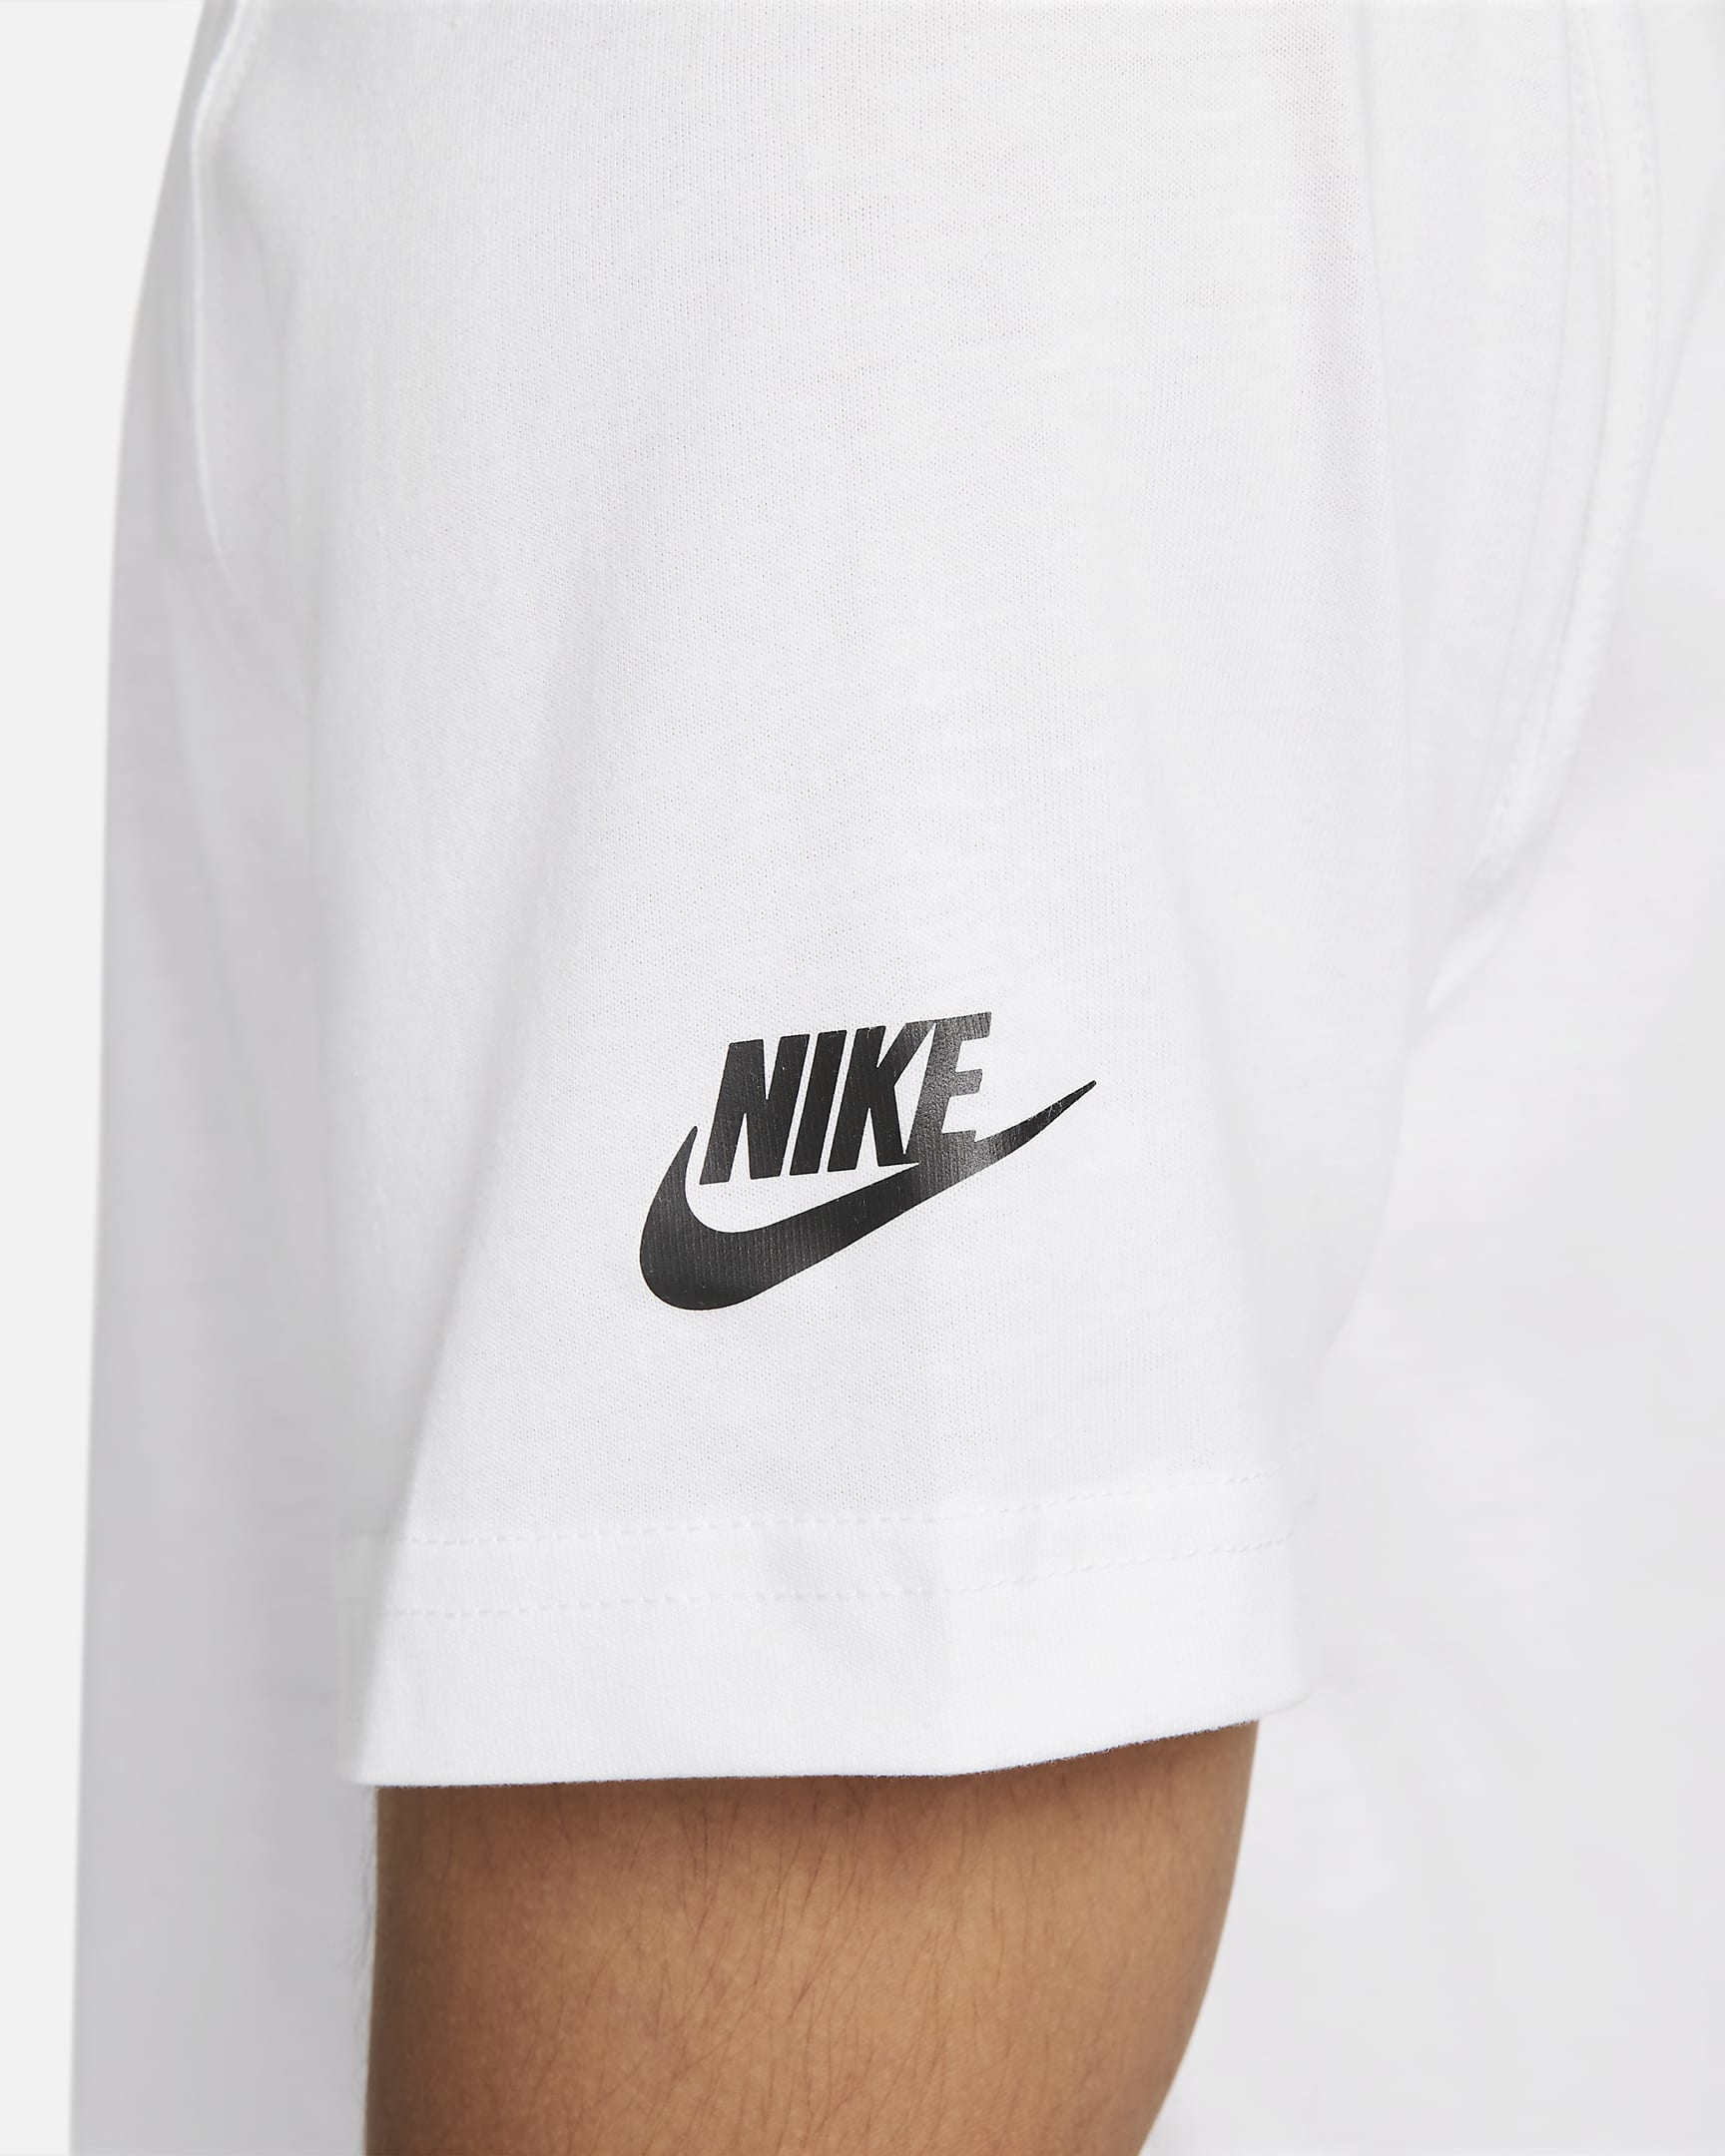 Nike Sportswear Air Max Men's T-Shirt. Nike SK